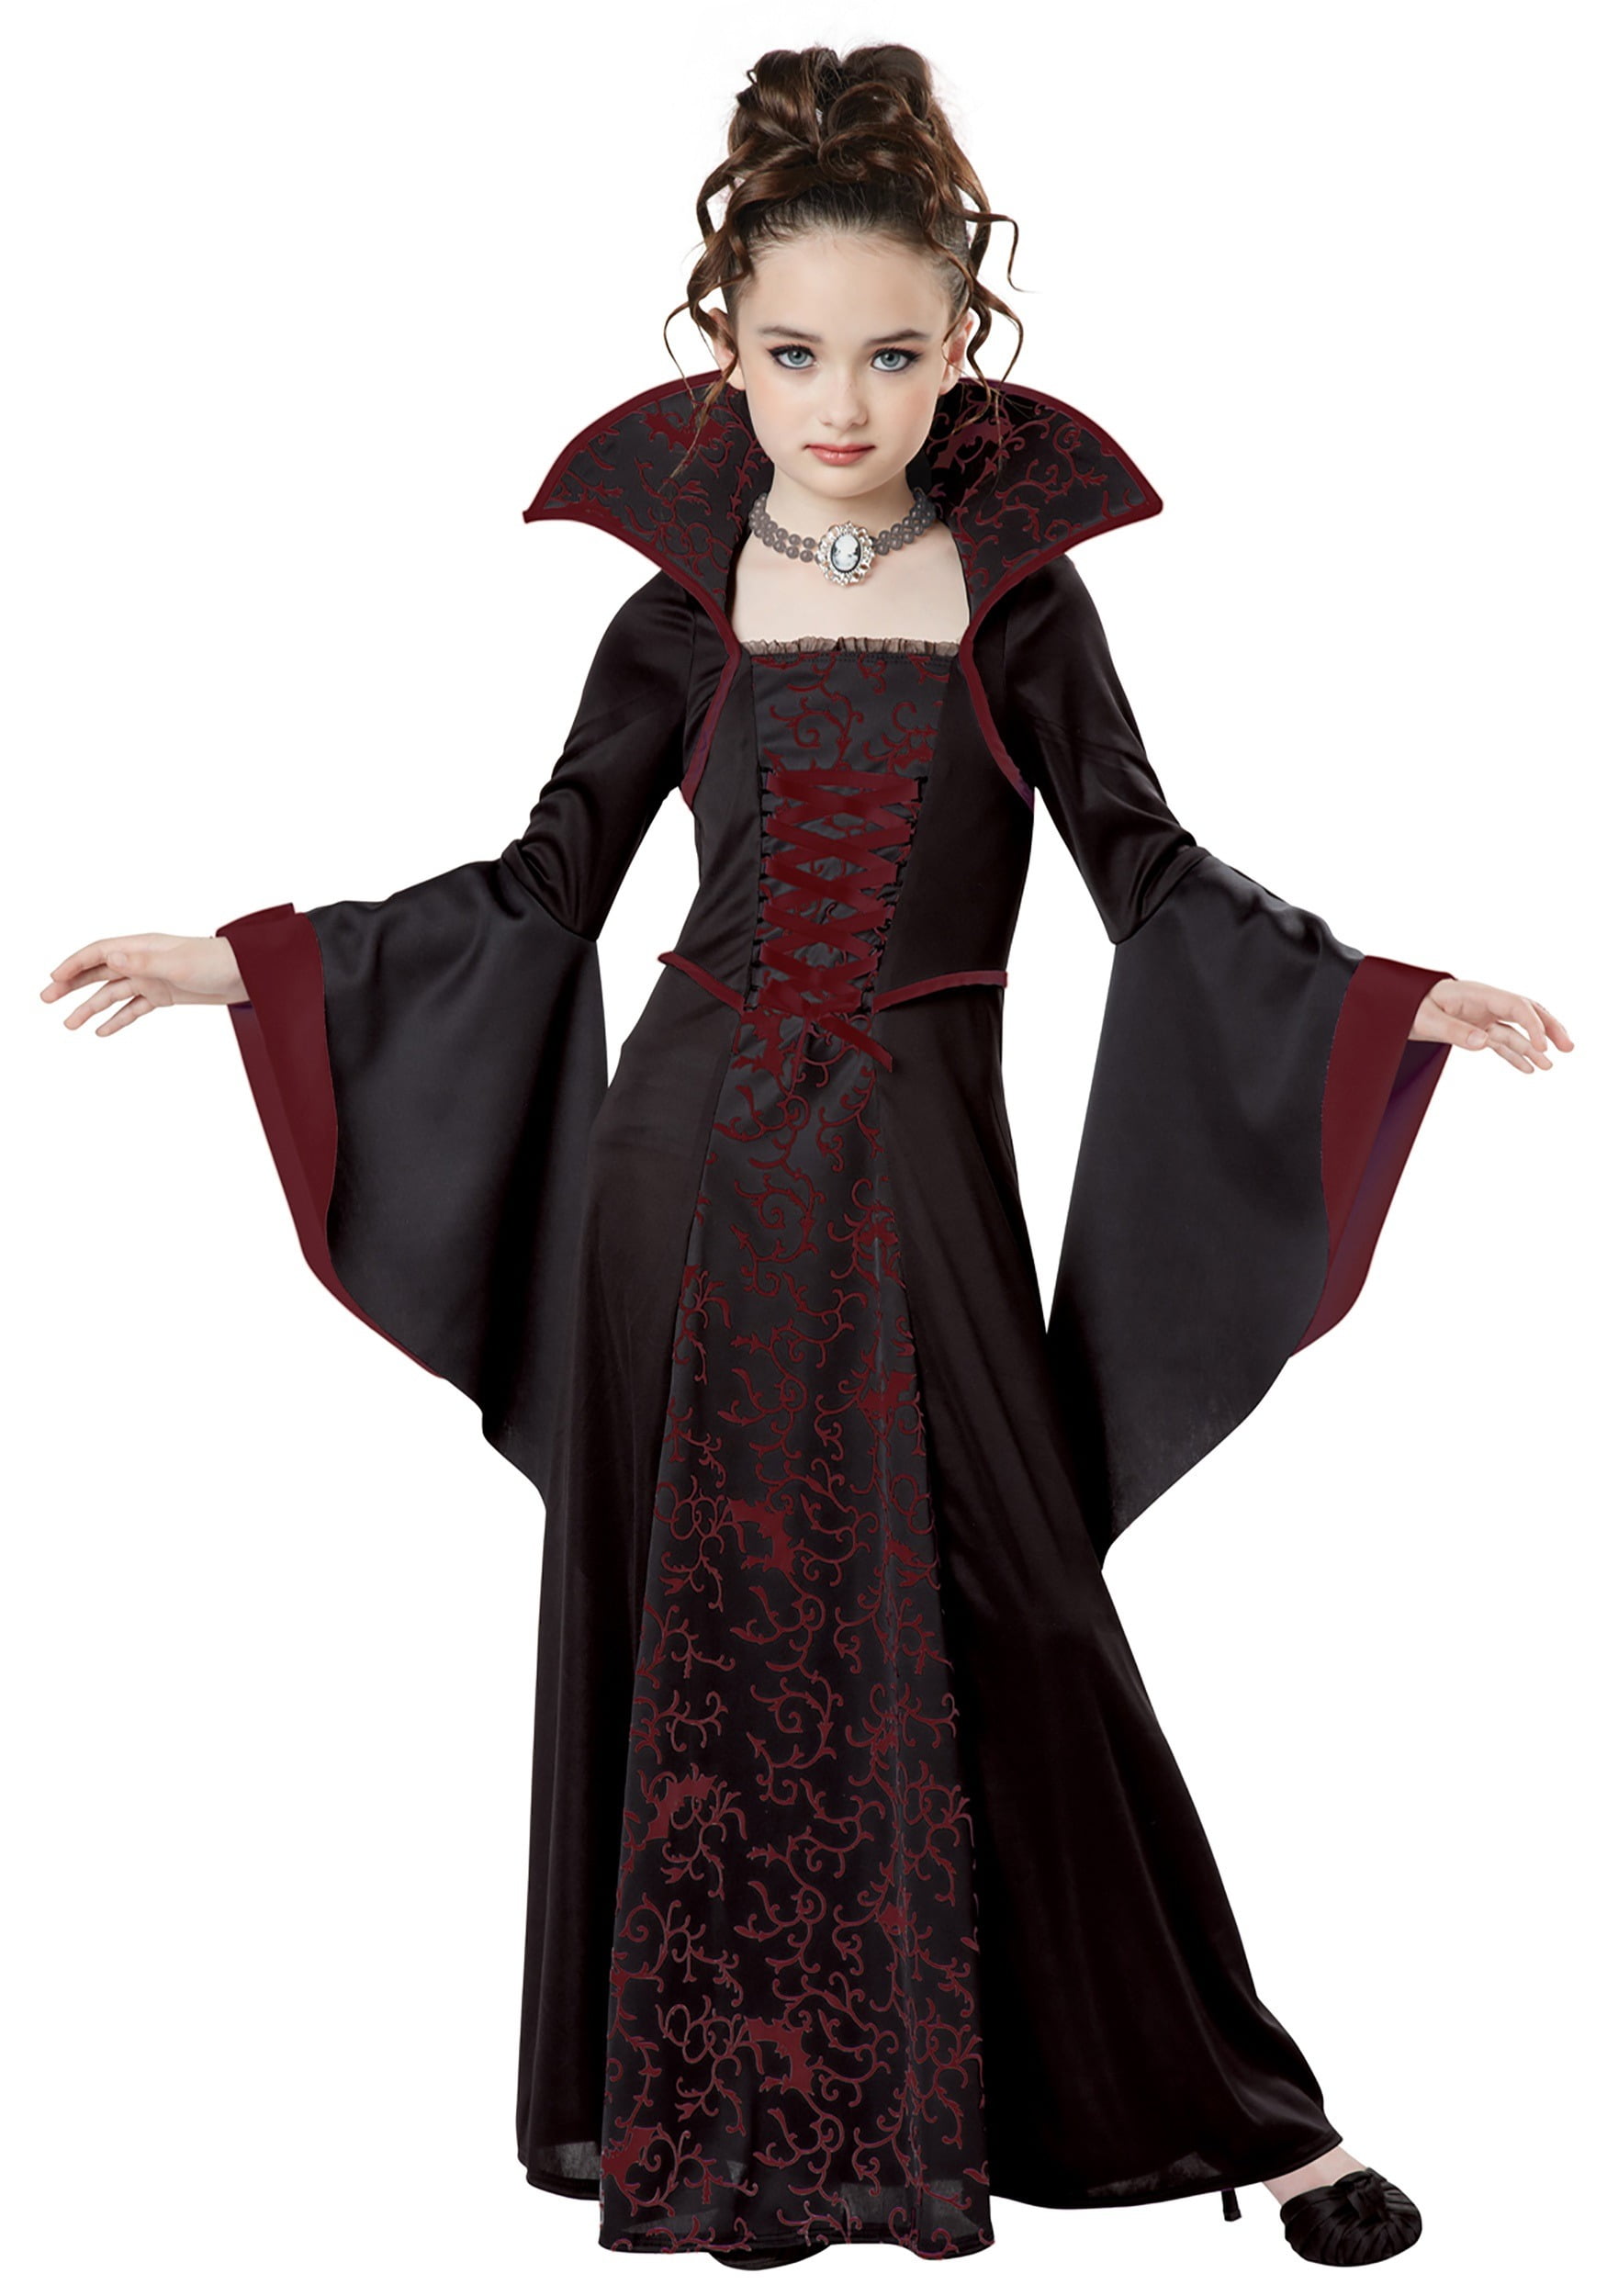 Childrens Gothic Vampiress Fancy Dress Costume Girls Halloween Childs Outfit M 